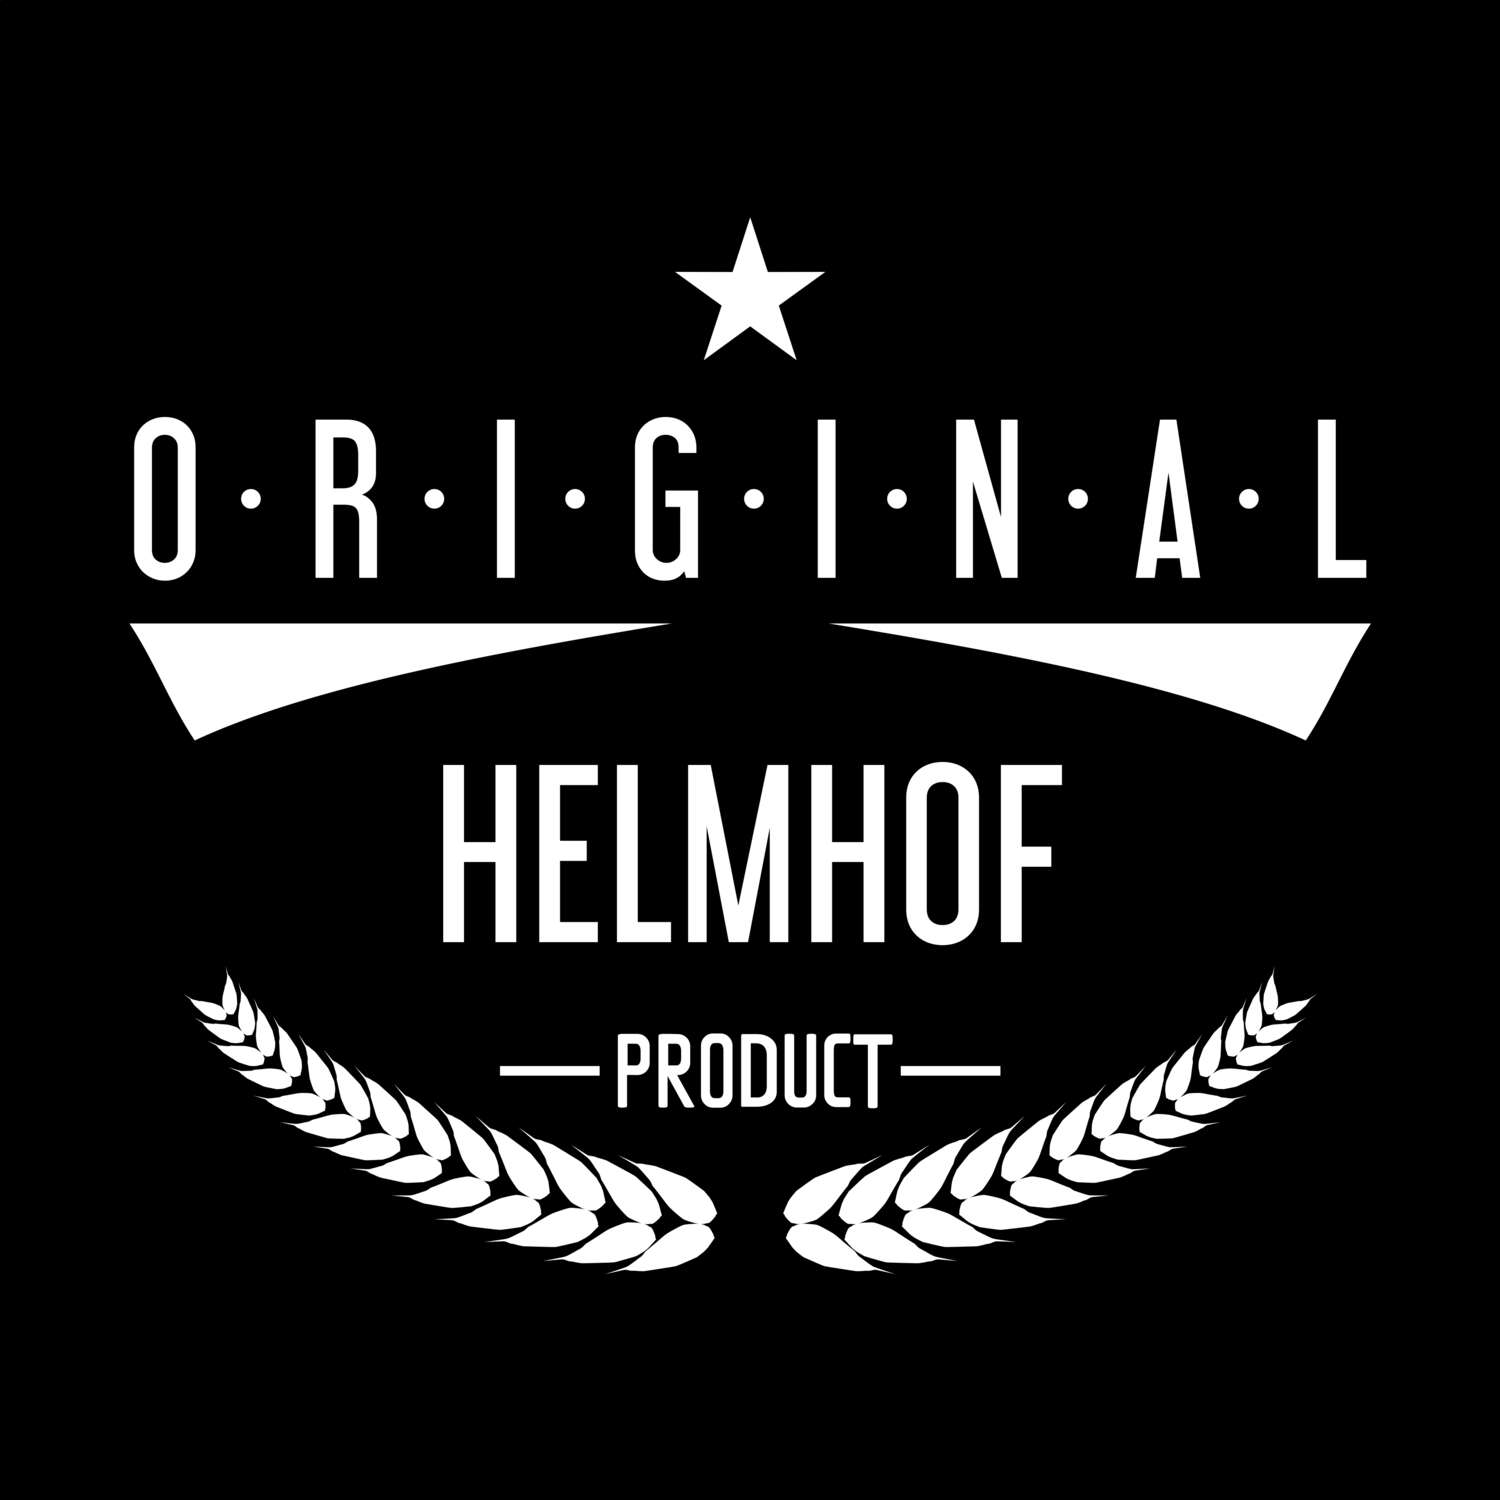 Helmhof T-Shirt »Original Product«